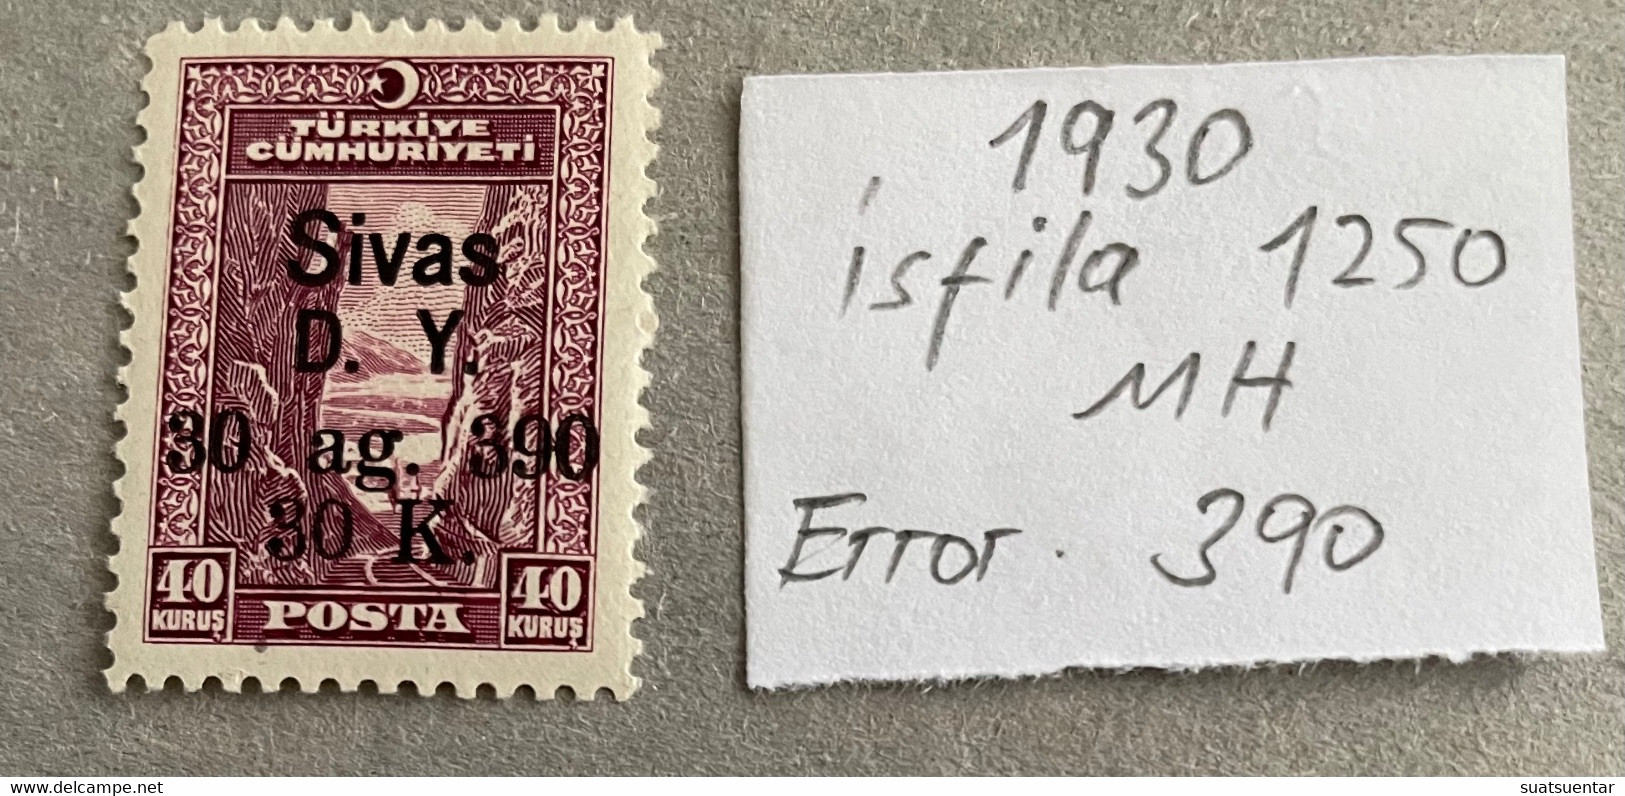 1930 Sivas-Ankara Railway Stamps Error   390 MH Isfila 1250 - Ongebruikt